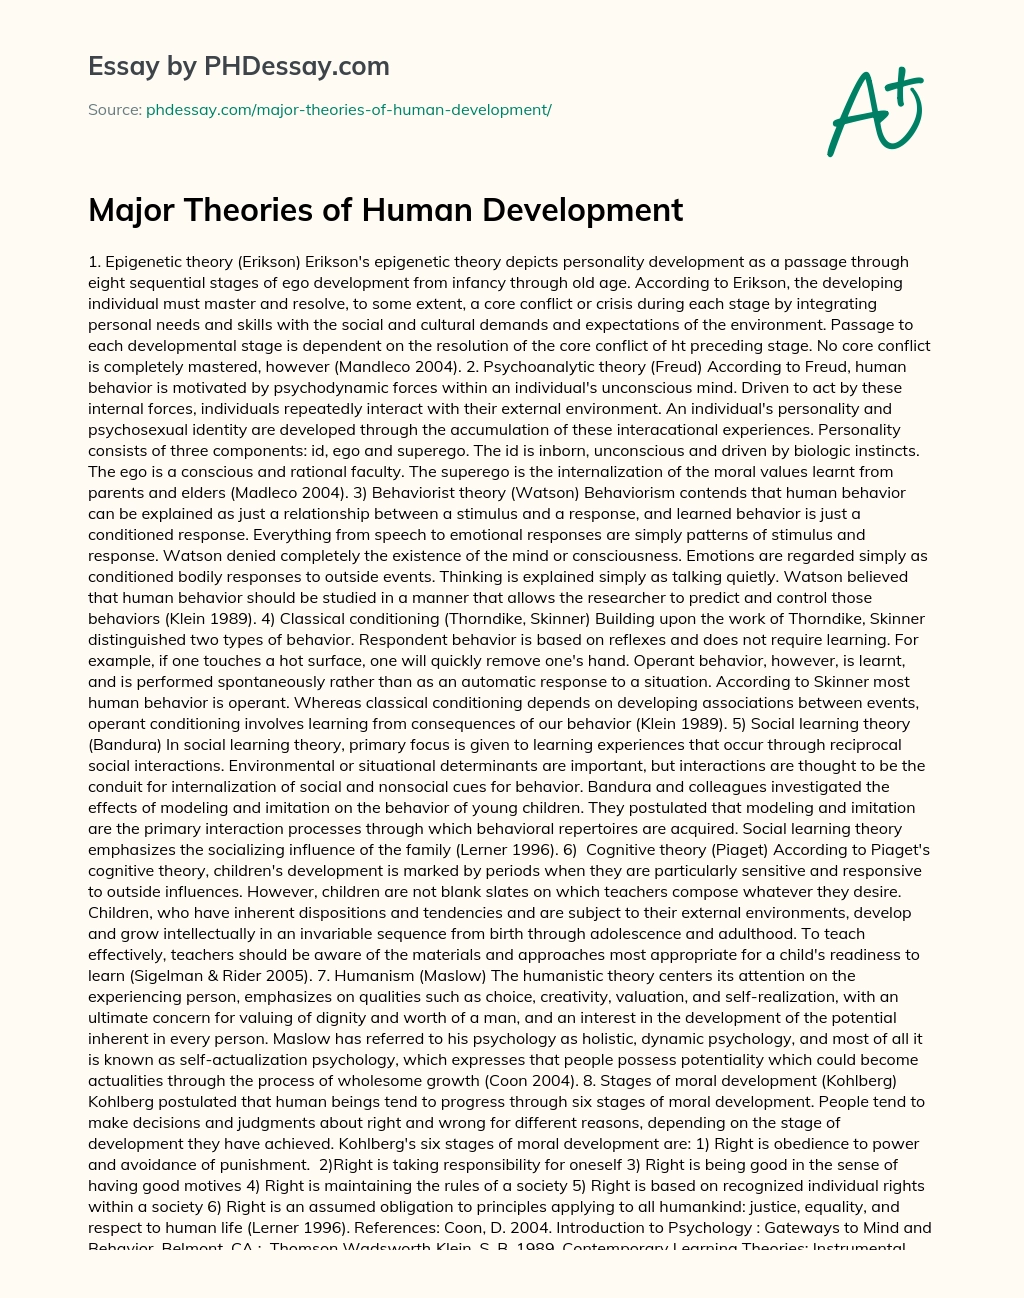 Major Theories of Human Development essay